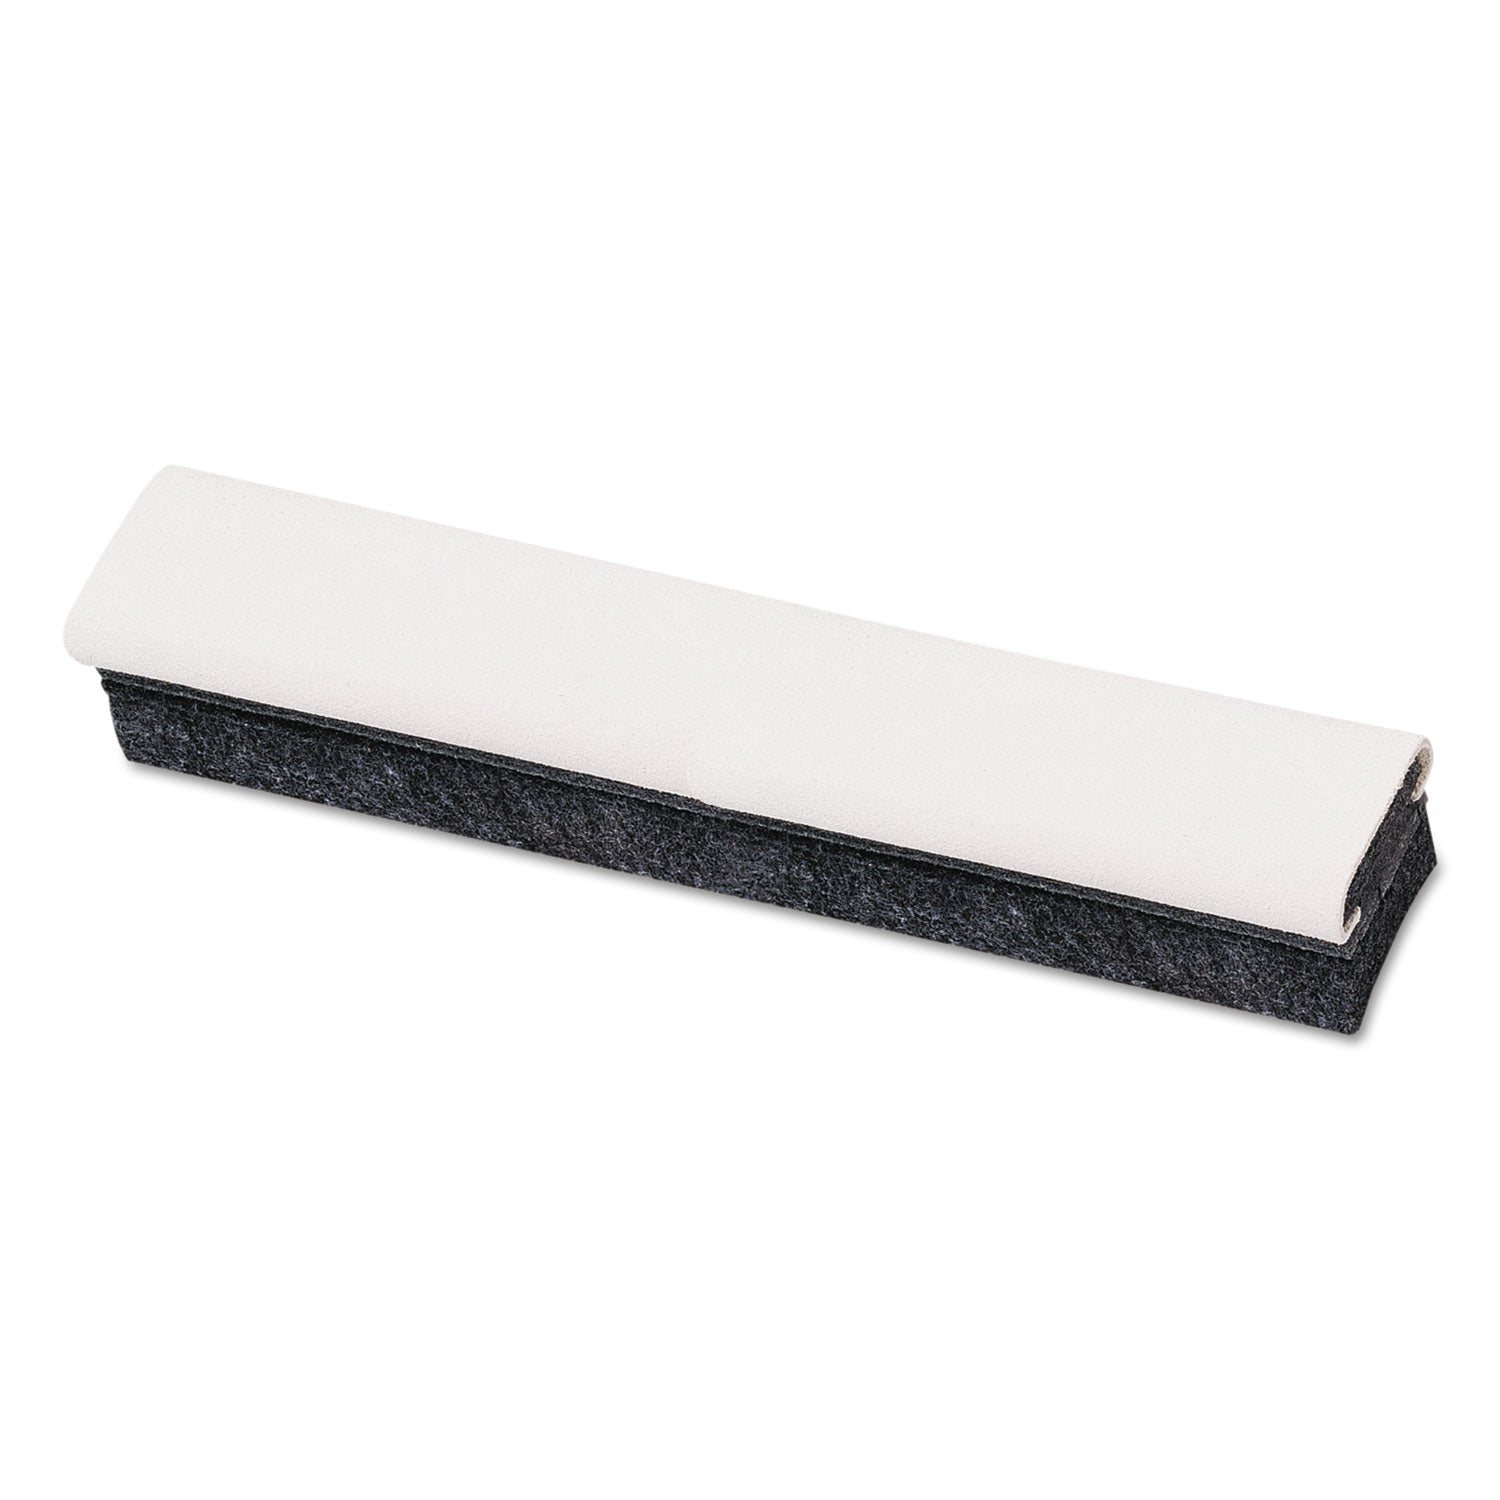 Deluxe Chalkboard Eraser/Cleaner, 12" x 2" x 1.63 - 